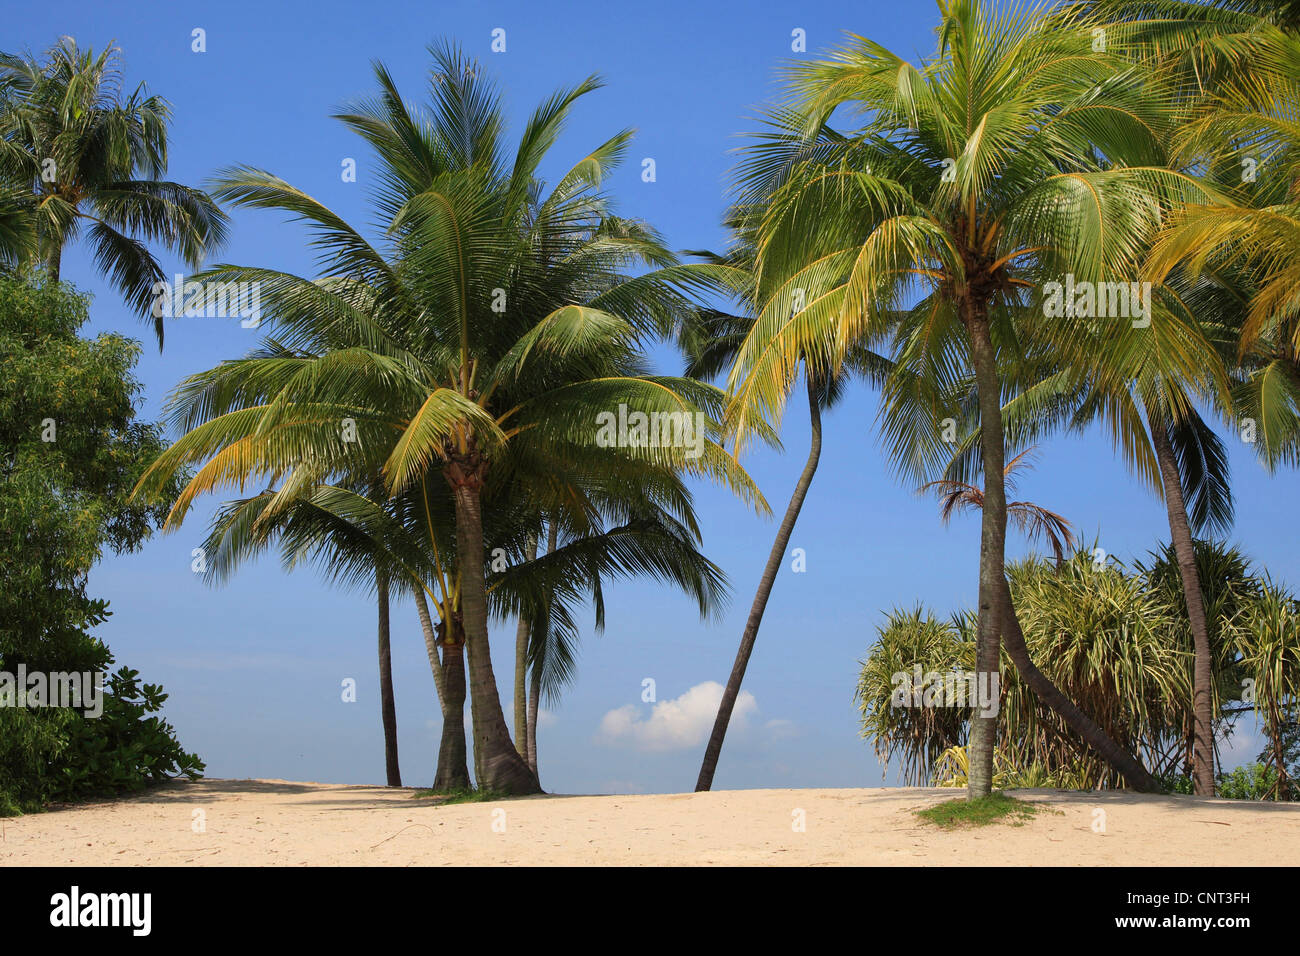 coconut palm (Cocos nucifera), palms on the beach, Singapore Stock Photo